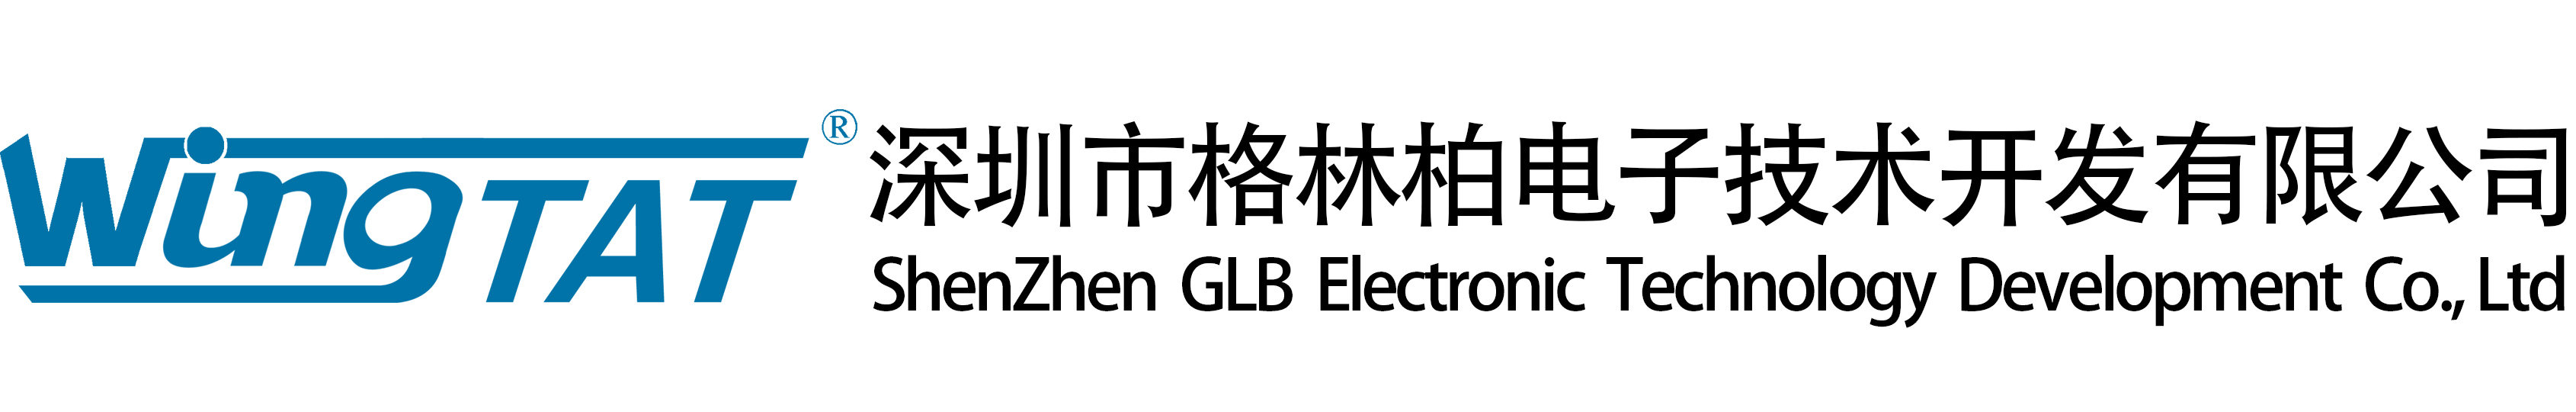 ShenZhen GLB Electronic Technology Development Co., Ltd